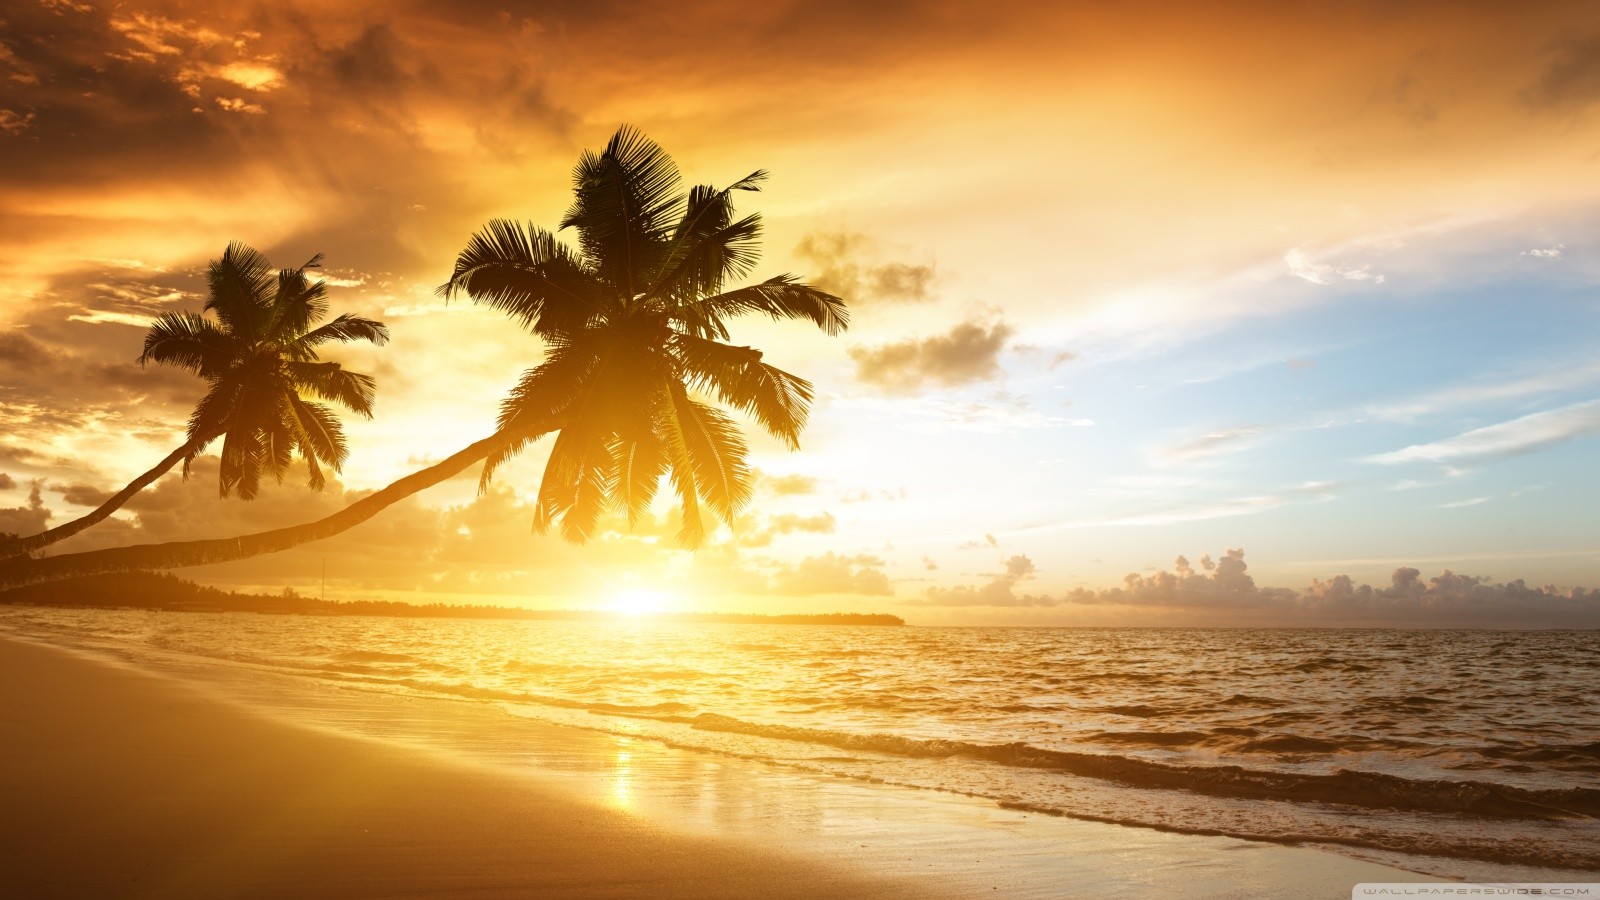 General 1600x900 sea palm trees yellow sunset beach outdoors sunlight sky